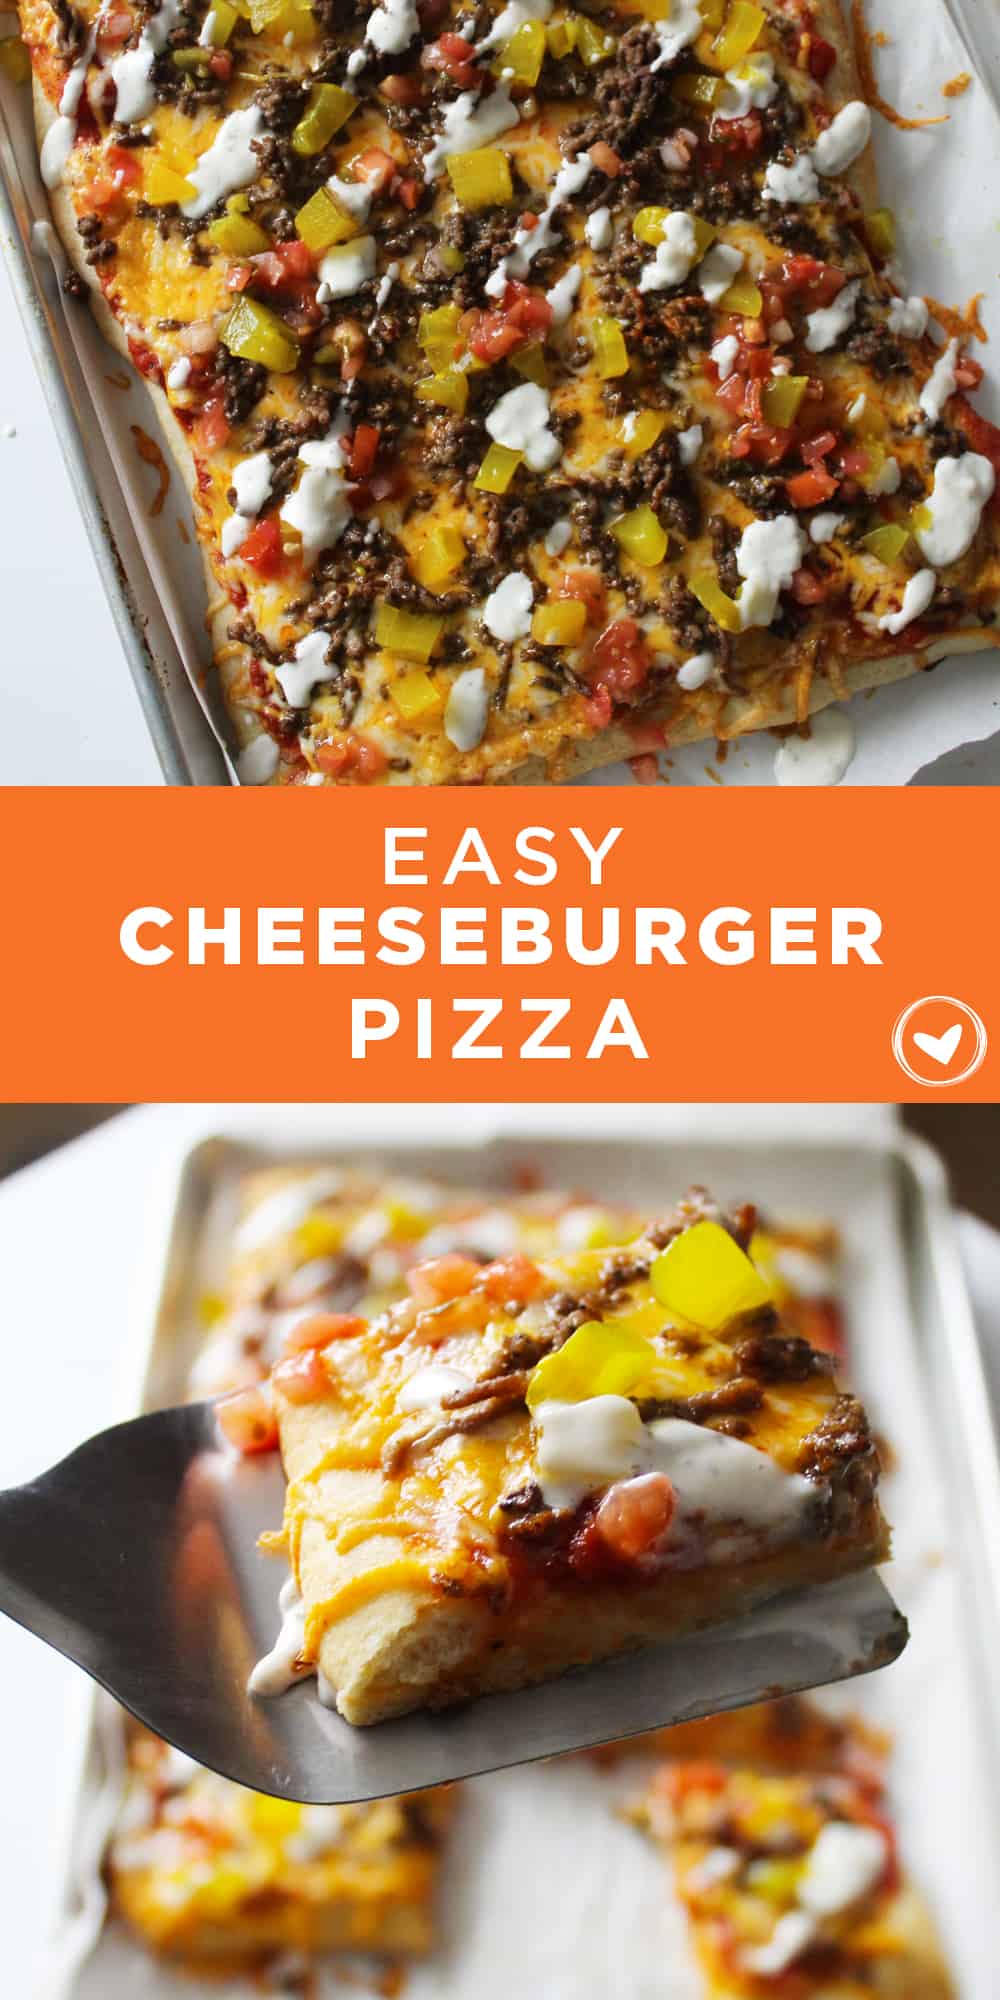 Make This Easy Cheeseburger Pizza